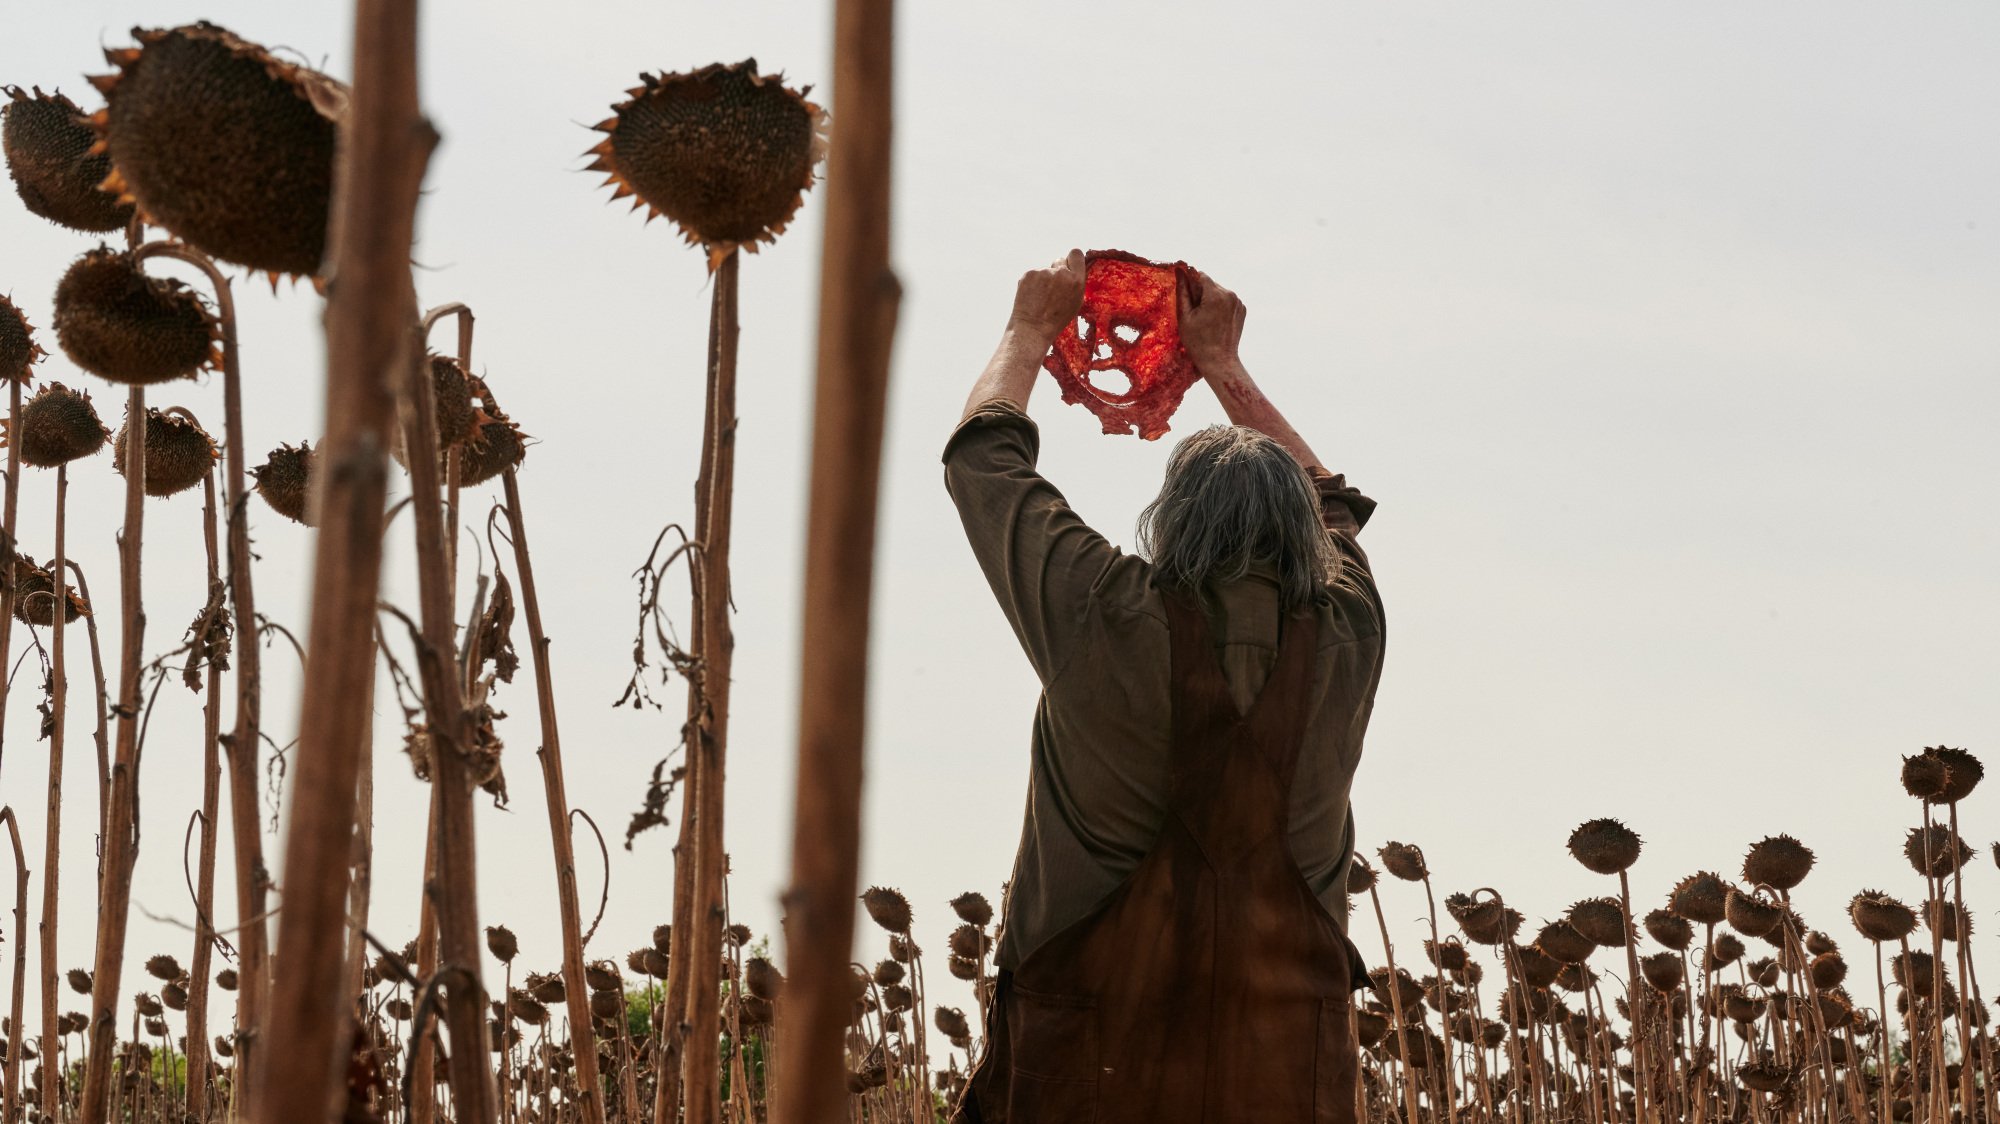 Mark Burnham as Leatherface in the 2022 adaptation, "Texas Chainsaw Massacre"